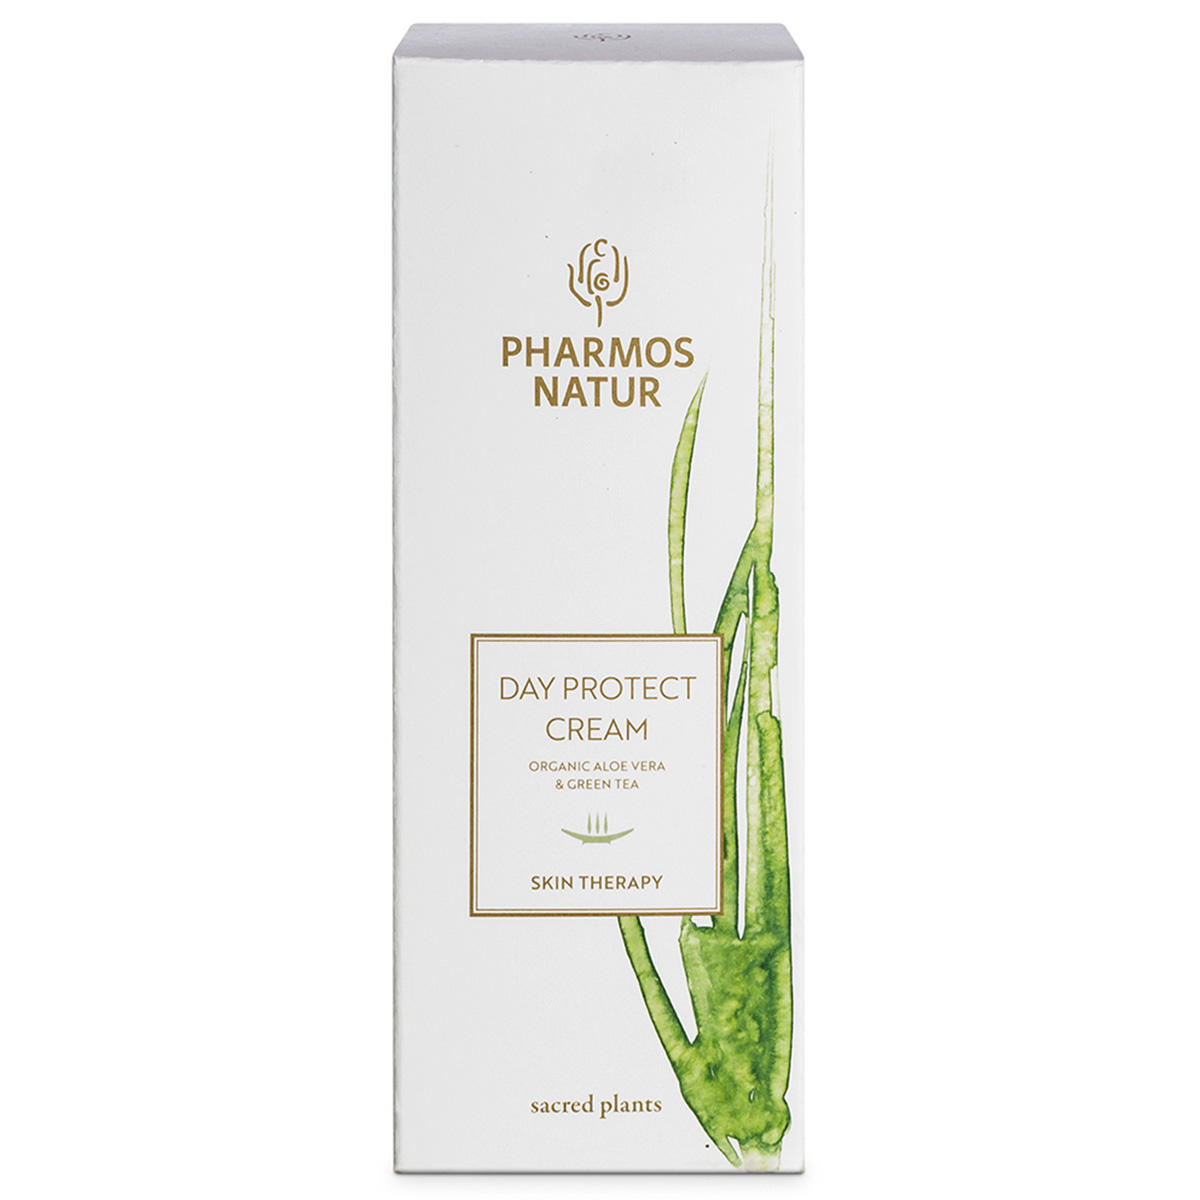 PHARMOS NATUR Skin Therapy Day Protect Cream 50 ml - 3